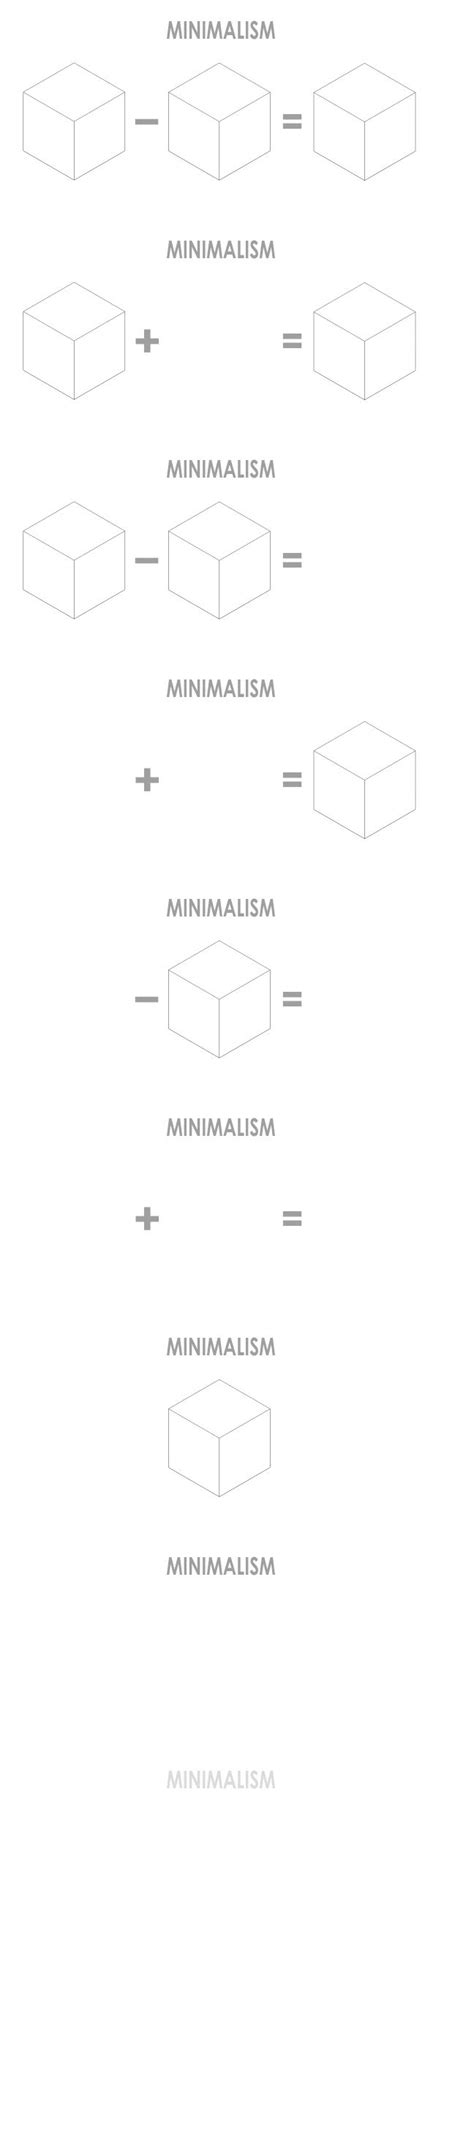 Ten Representations Of Minimalism